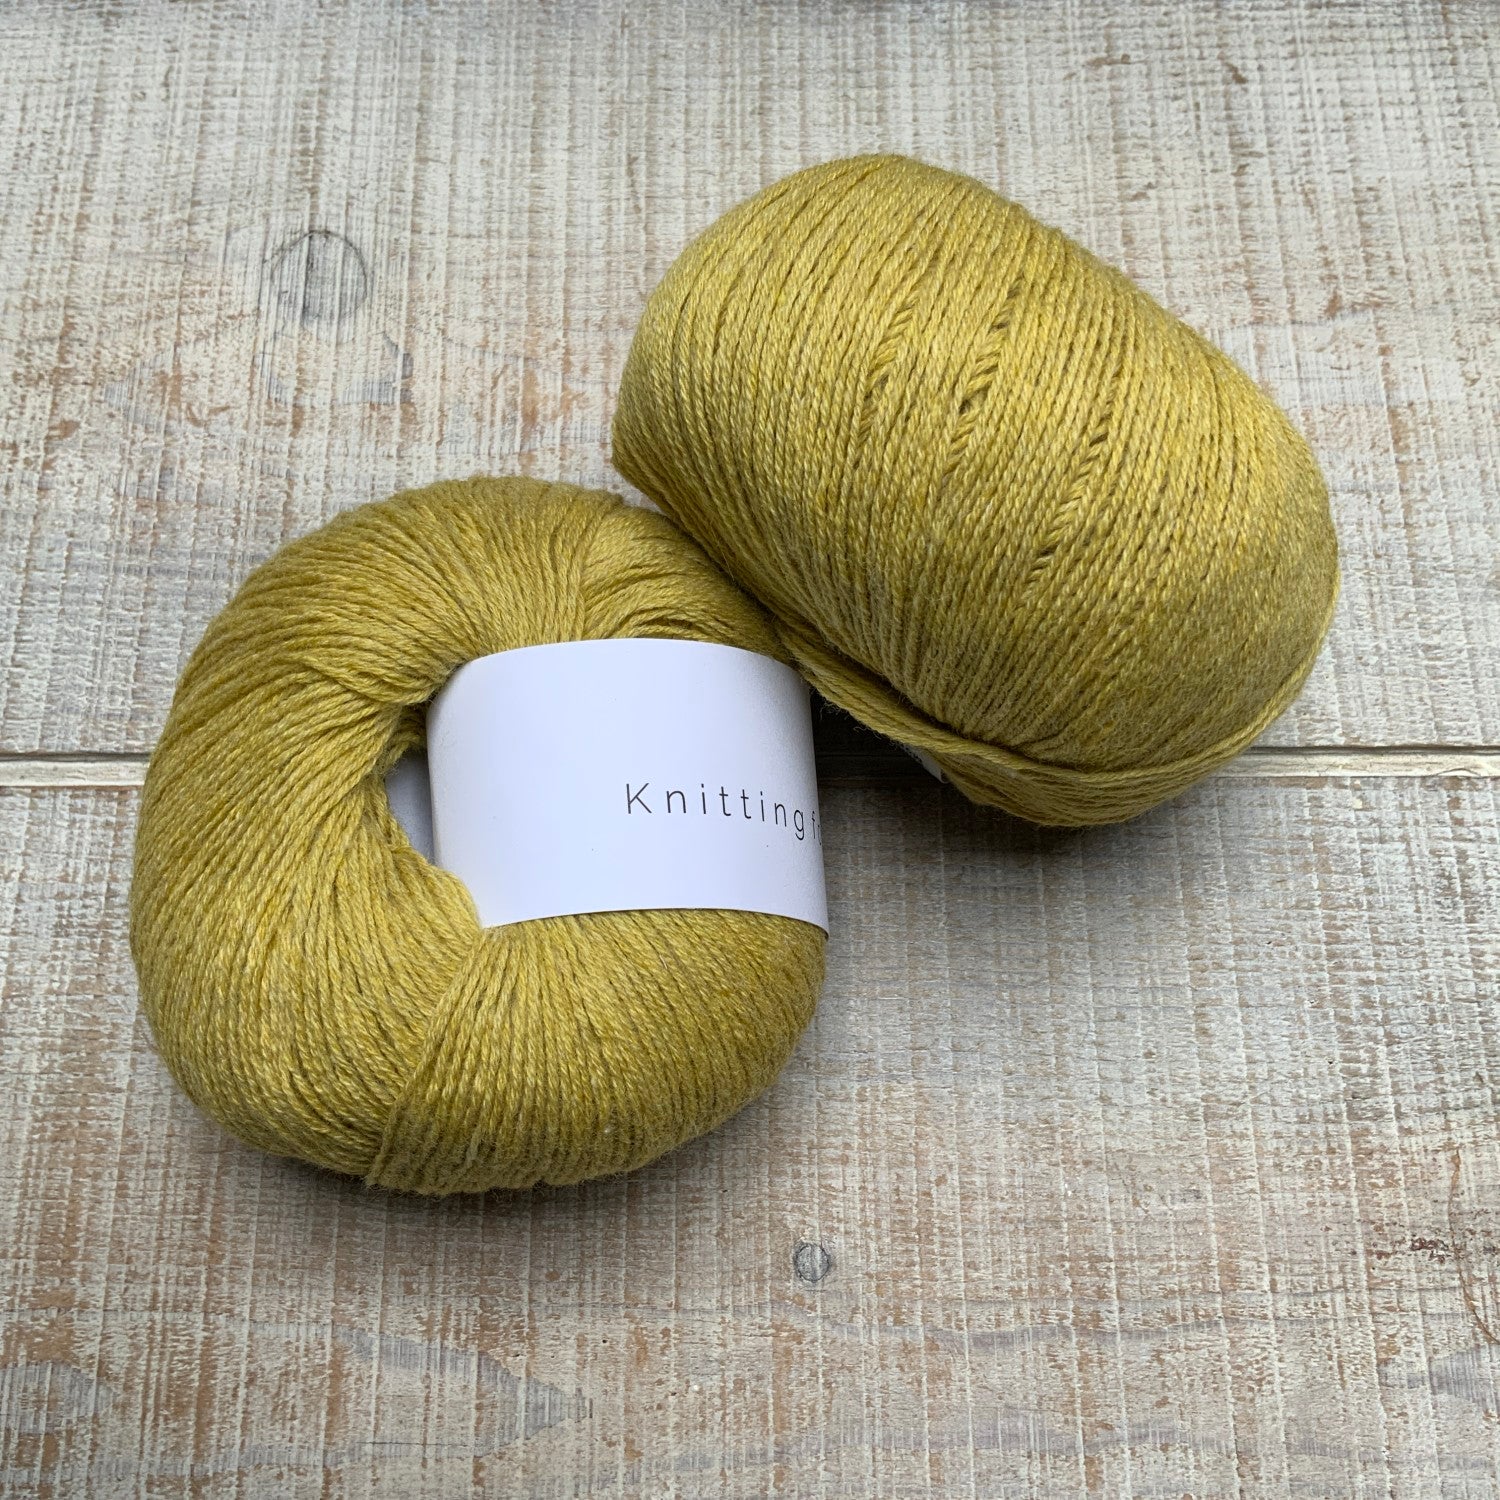 Knitting for Olive Soft Silk Mohair - Petroleum Green –